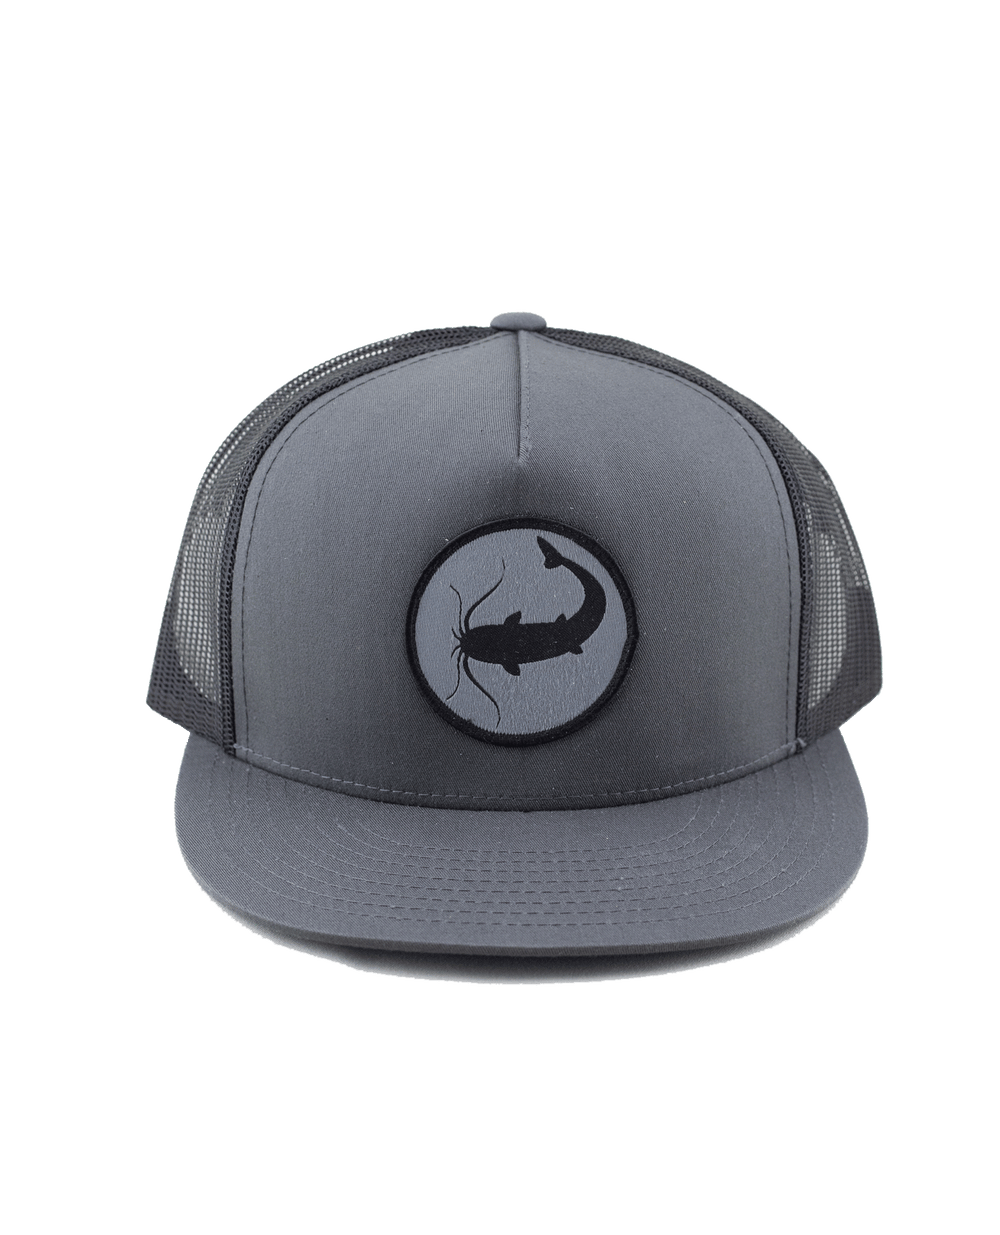 CATFISH - lake fish pond angler fishing - Vintage Retro Style Trucker Cap  Hat (Black) 